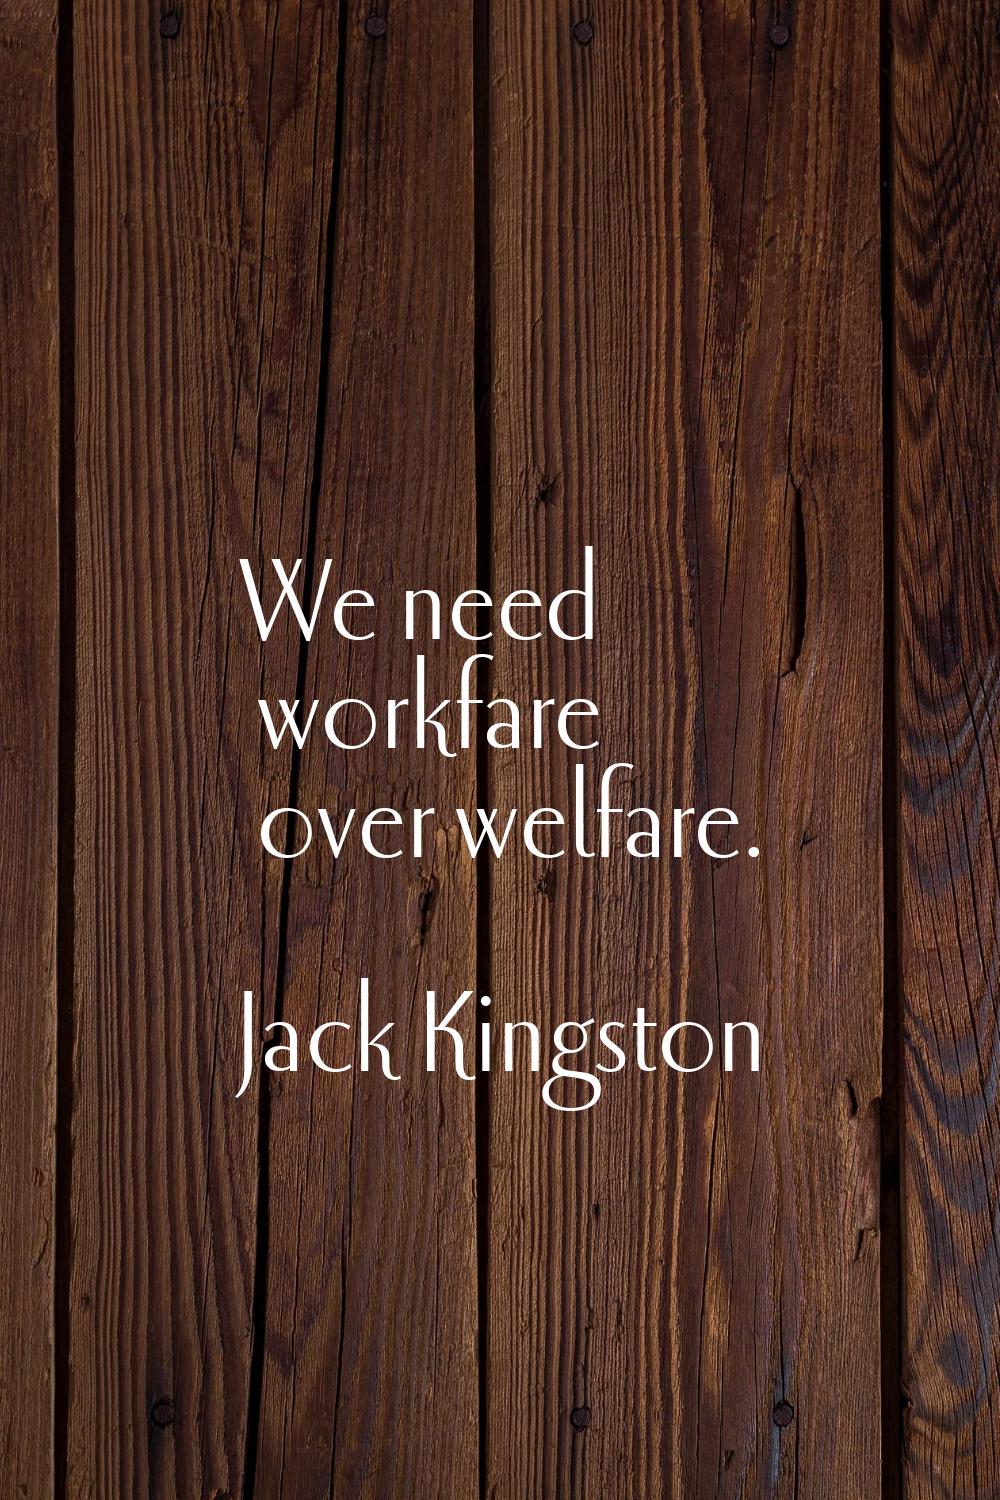 We need workfare over welfare.